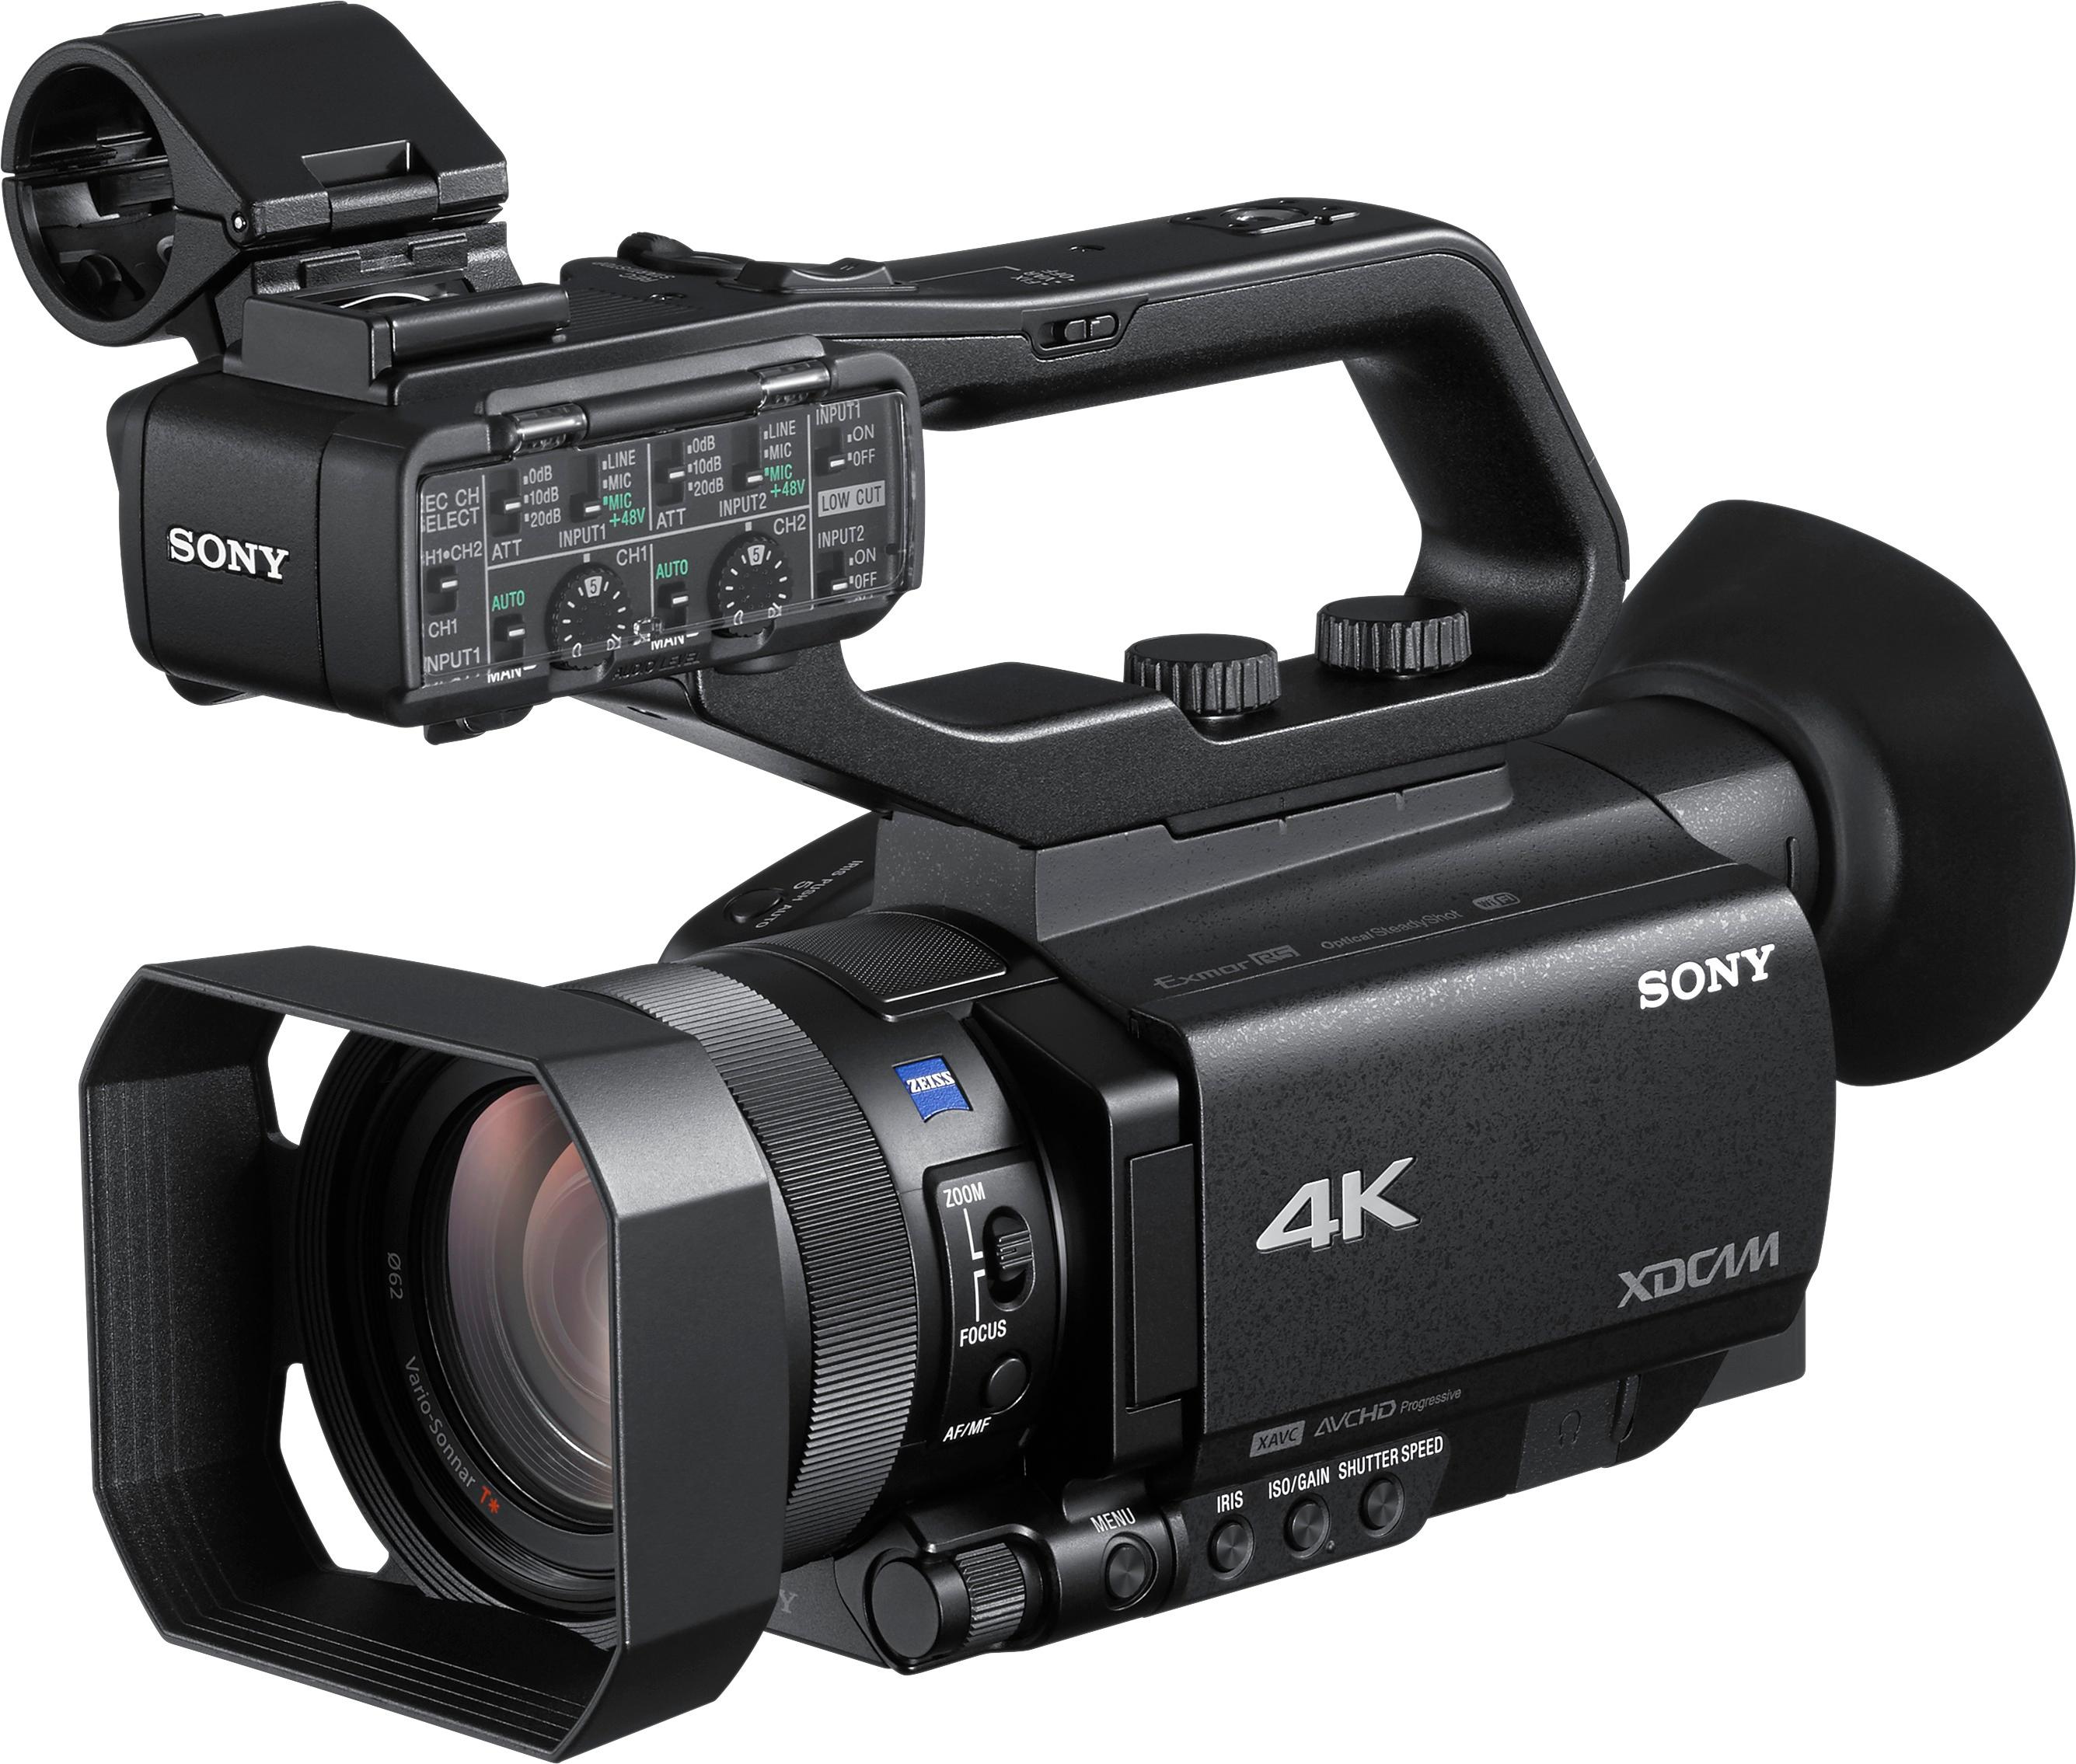 Angle View: Sony - XDCAM PXW-Z90V 4K Flash Memory Premium Camcorder - Black